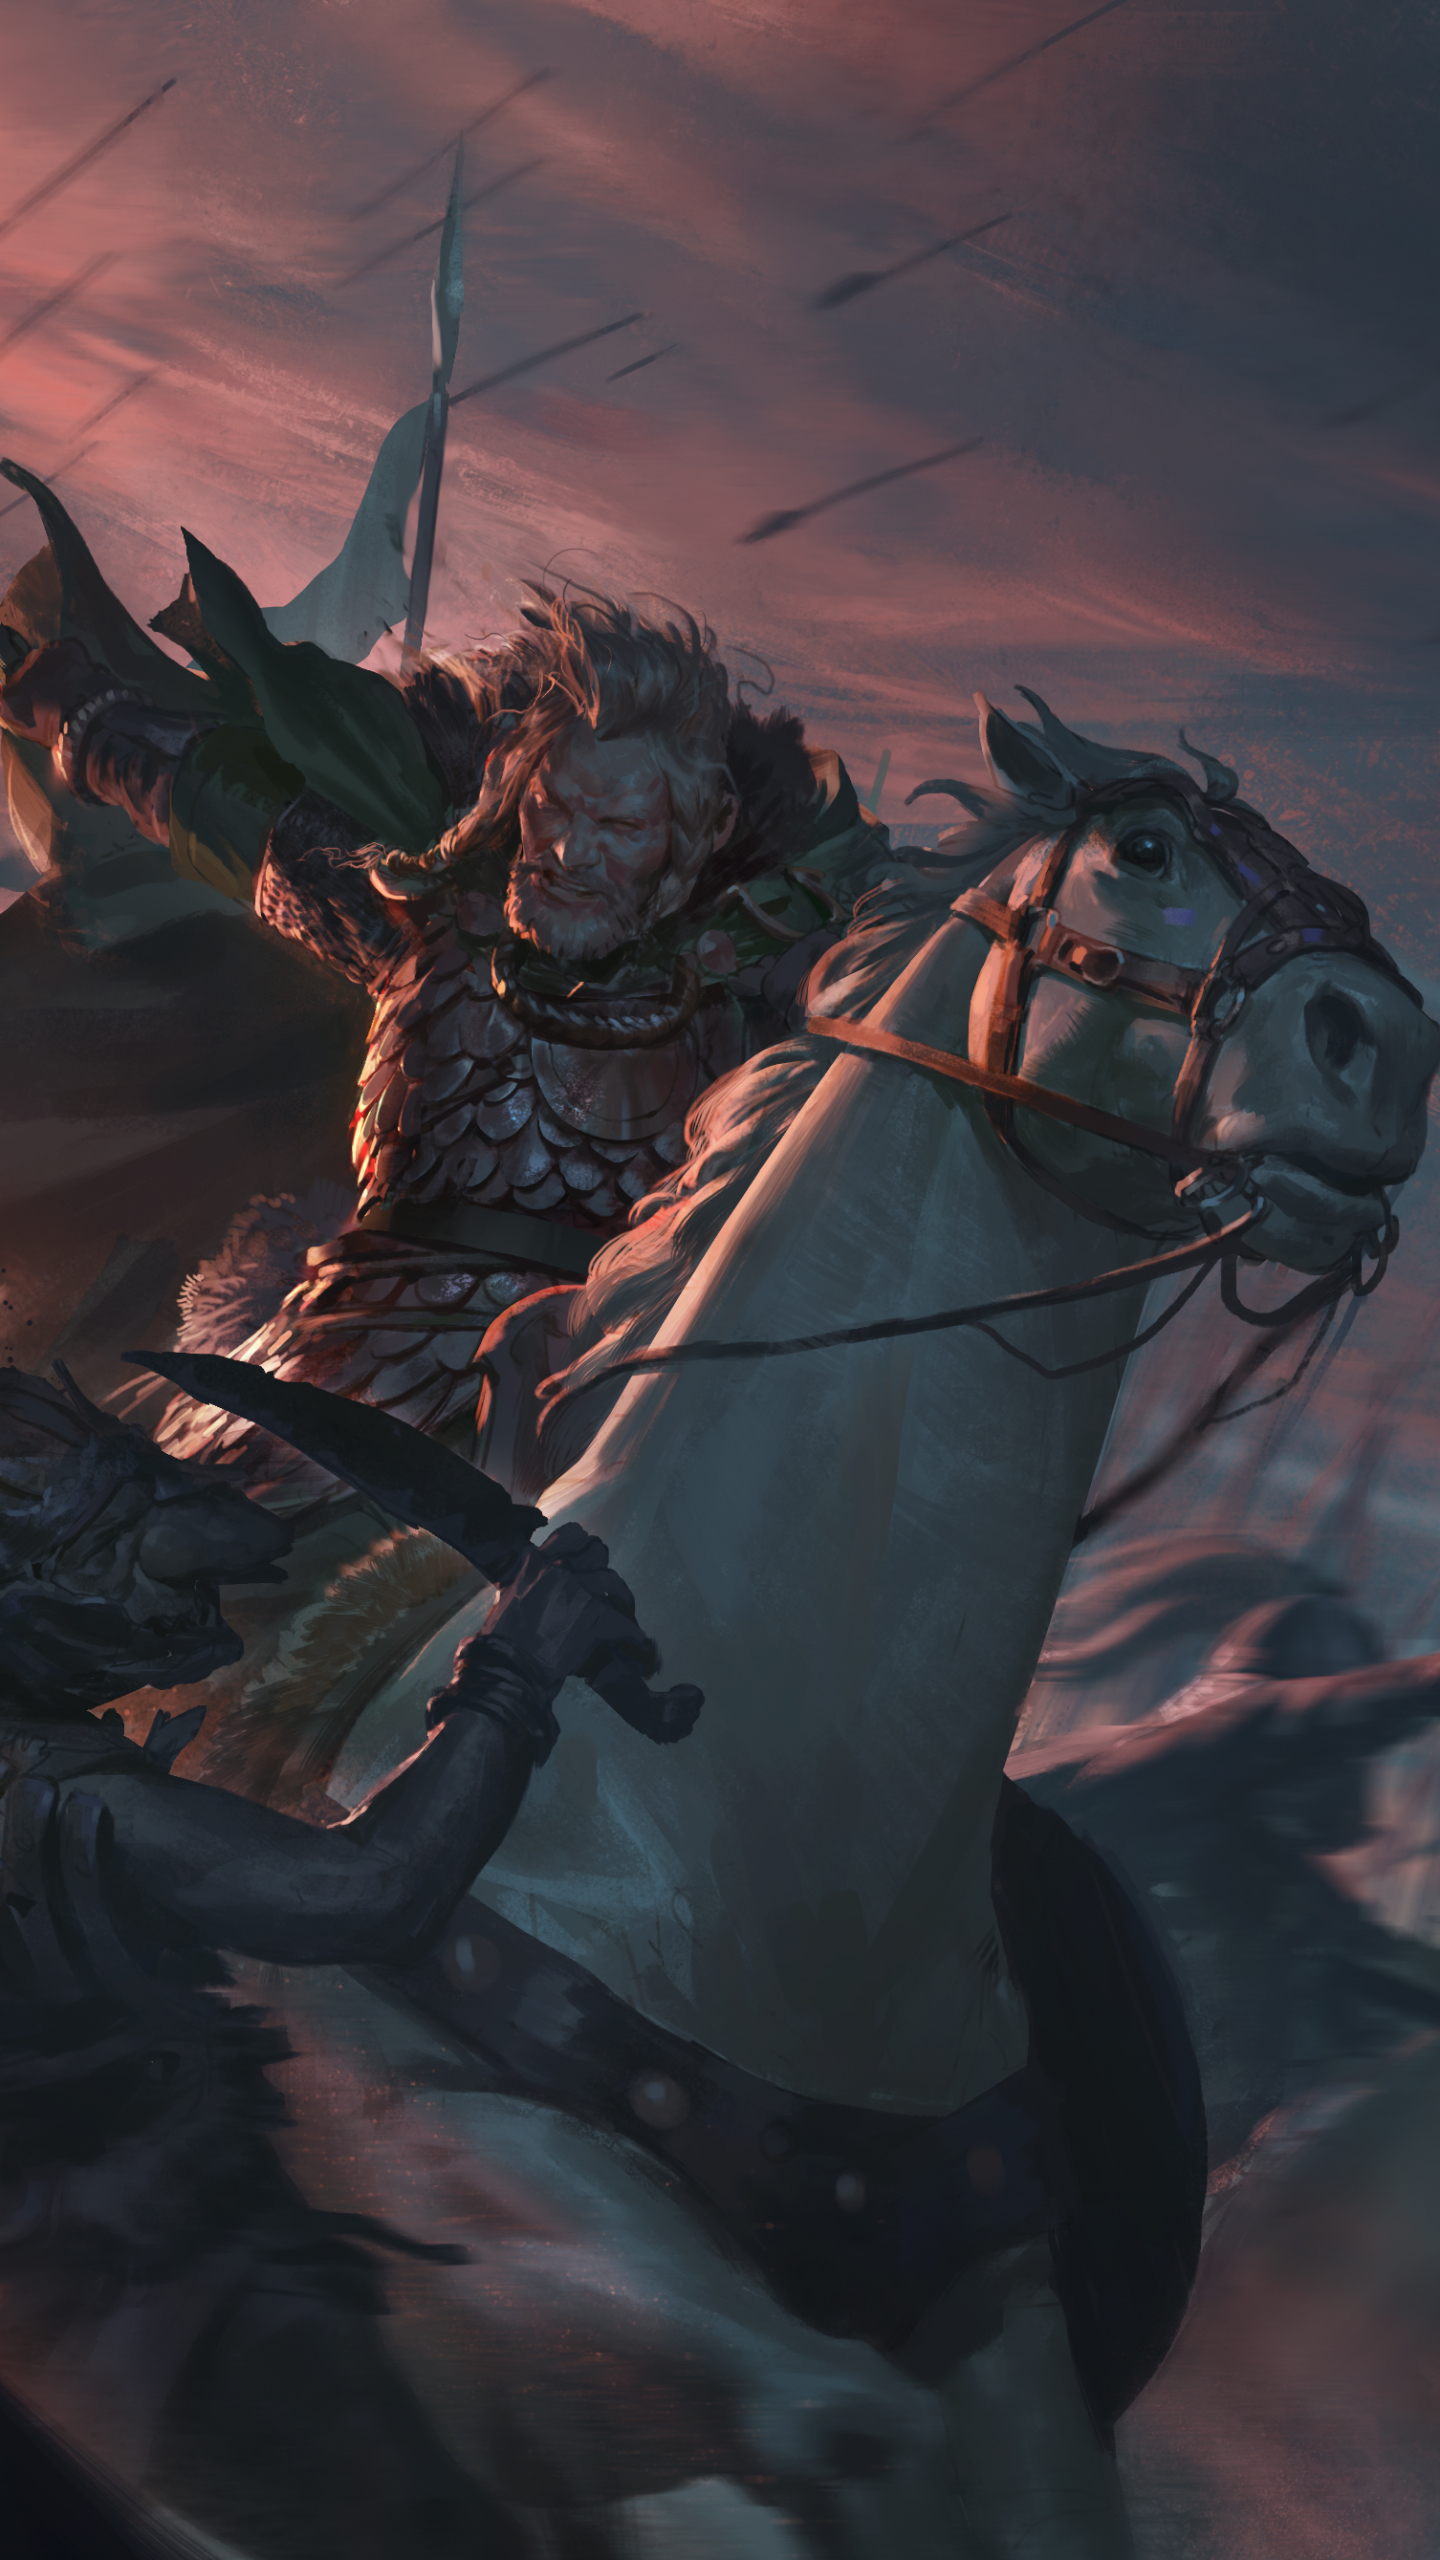 Descarga gratuita de fondo de pantalla para móvil de Fantasía, Guerrero, Batalla, Vikingo.